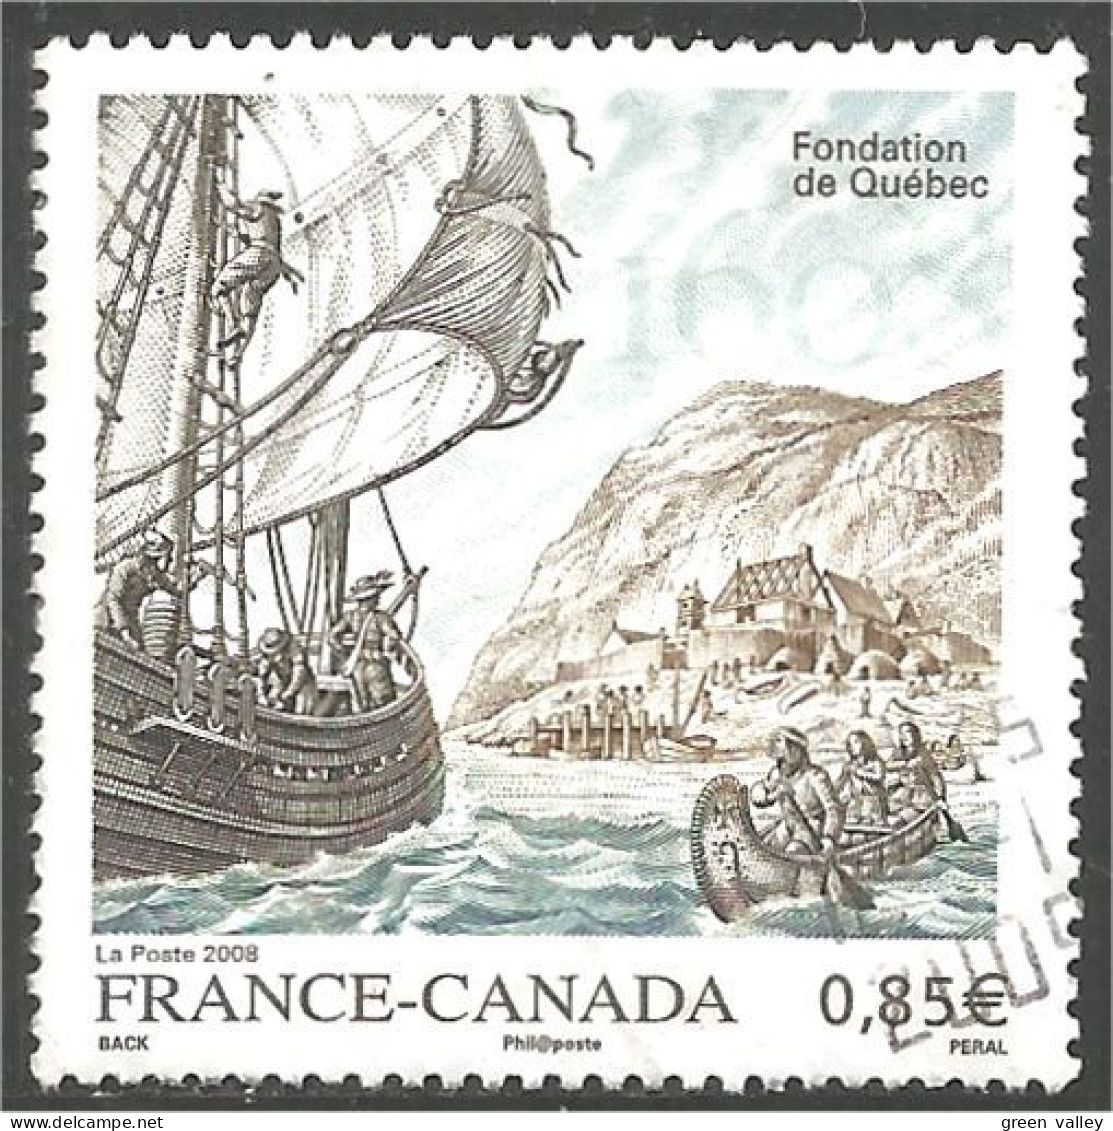 331eu-109 France Fondation Québec Foundation Canot Canoe Indien Indian - Indios Americanas